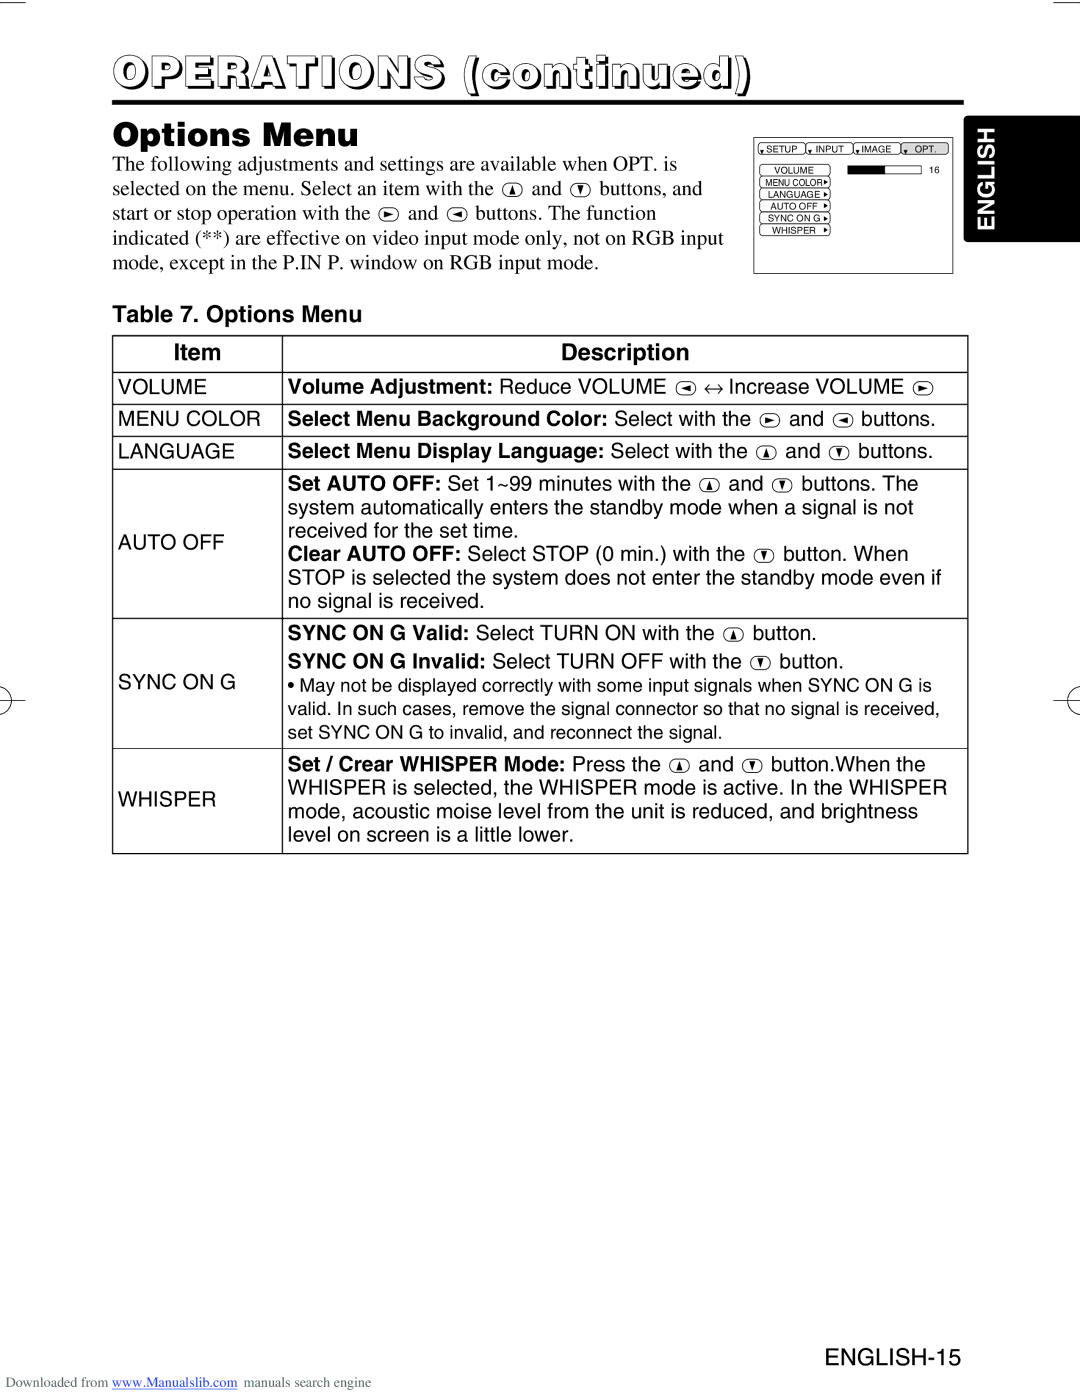 Hitachi CP-SX5500W manual Options Menu Description 